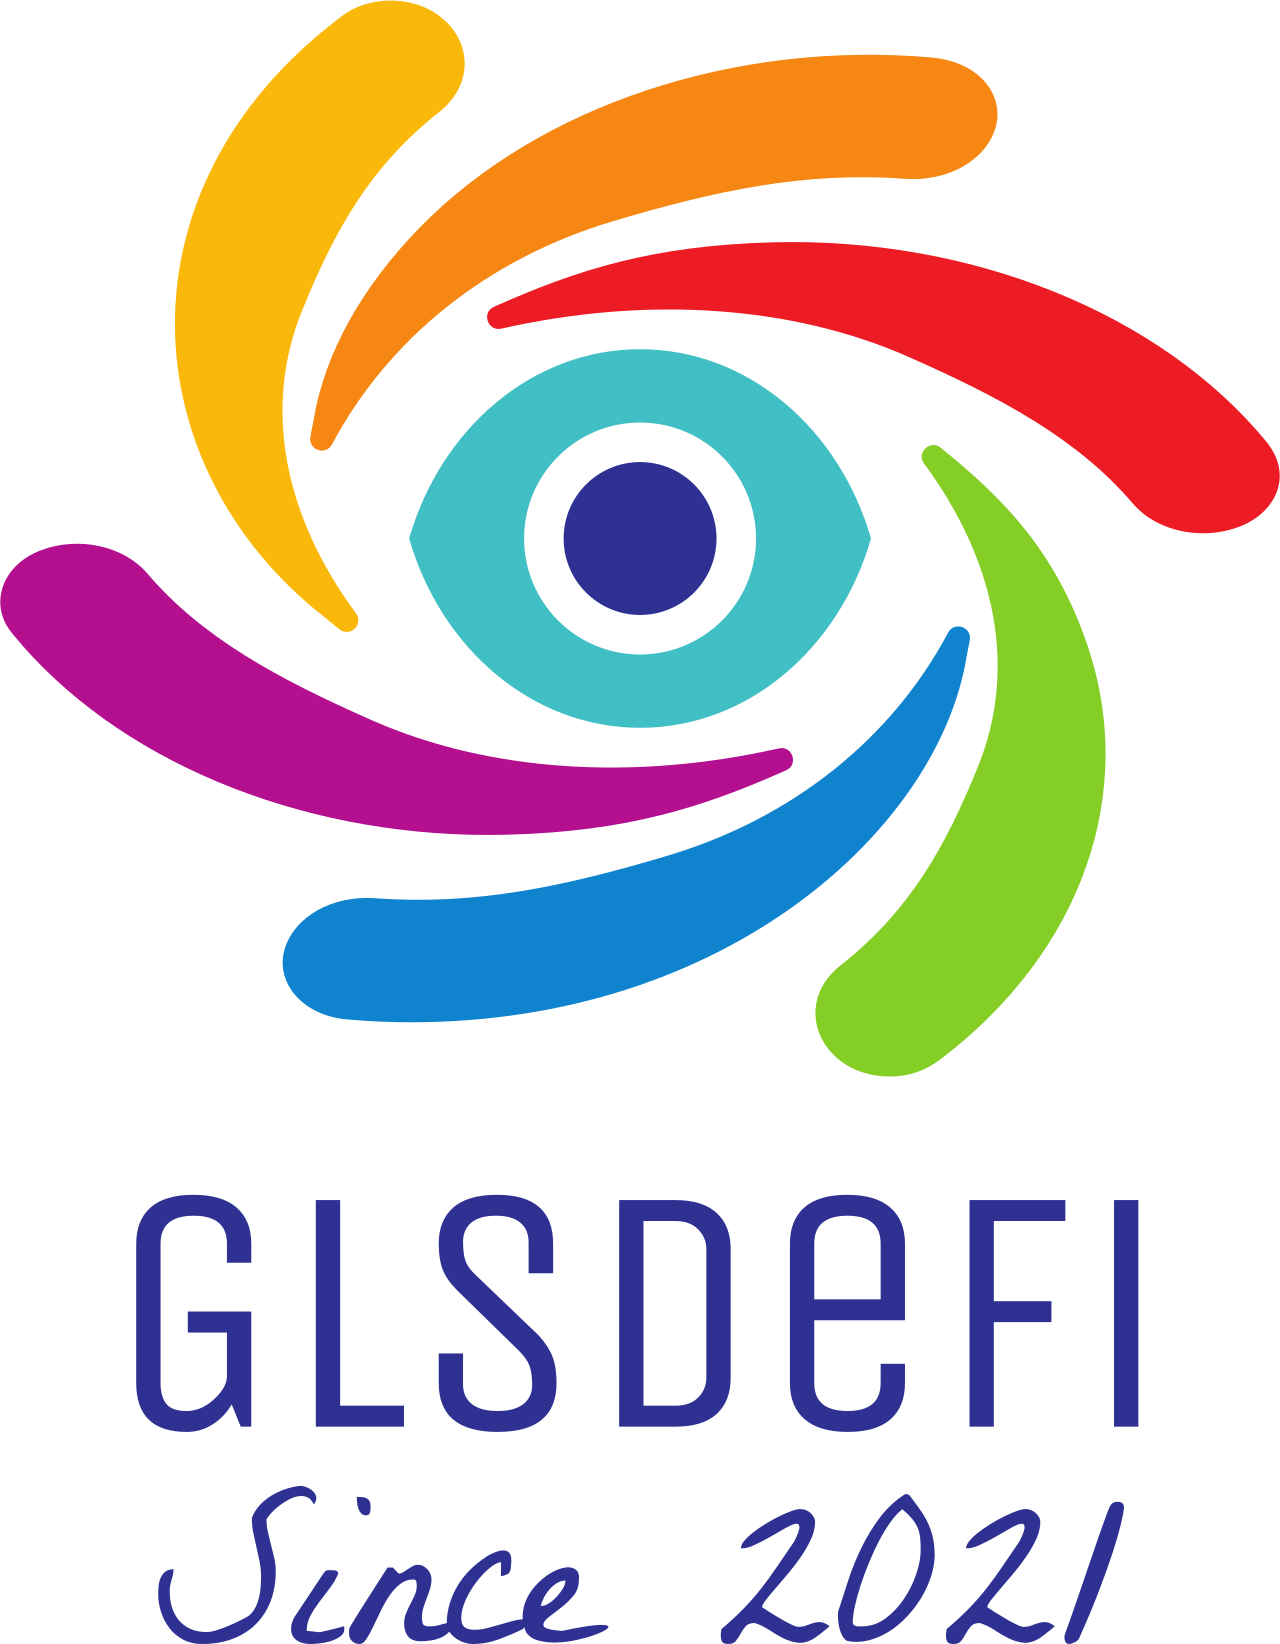 GLSDefi's web page